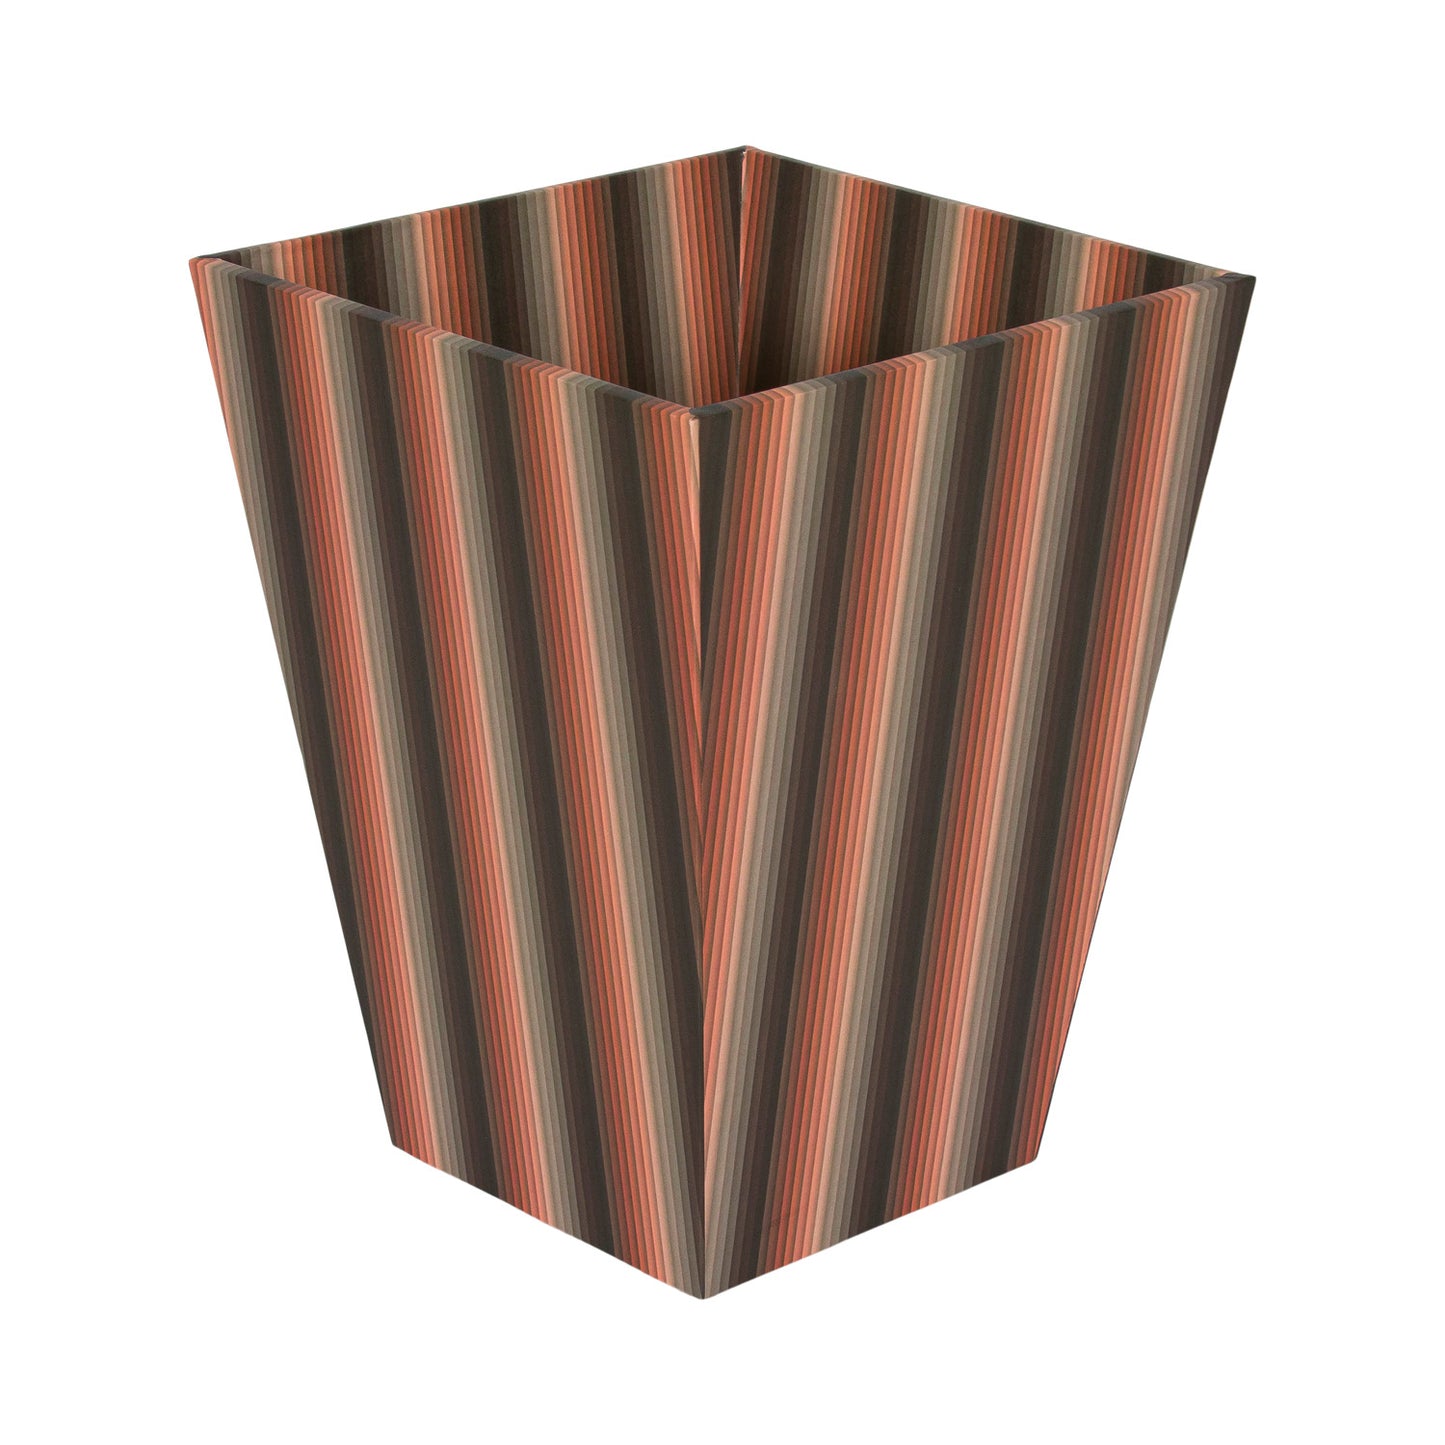 Waste Paper Bin - Undulating Stripes in Orange